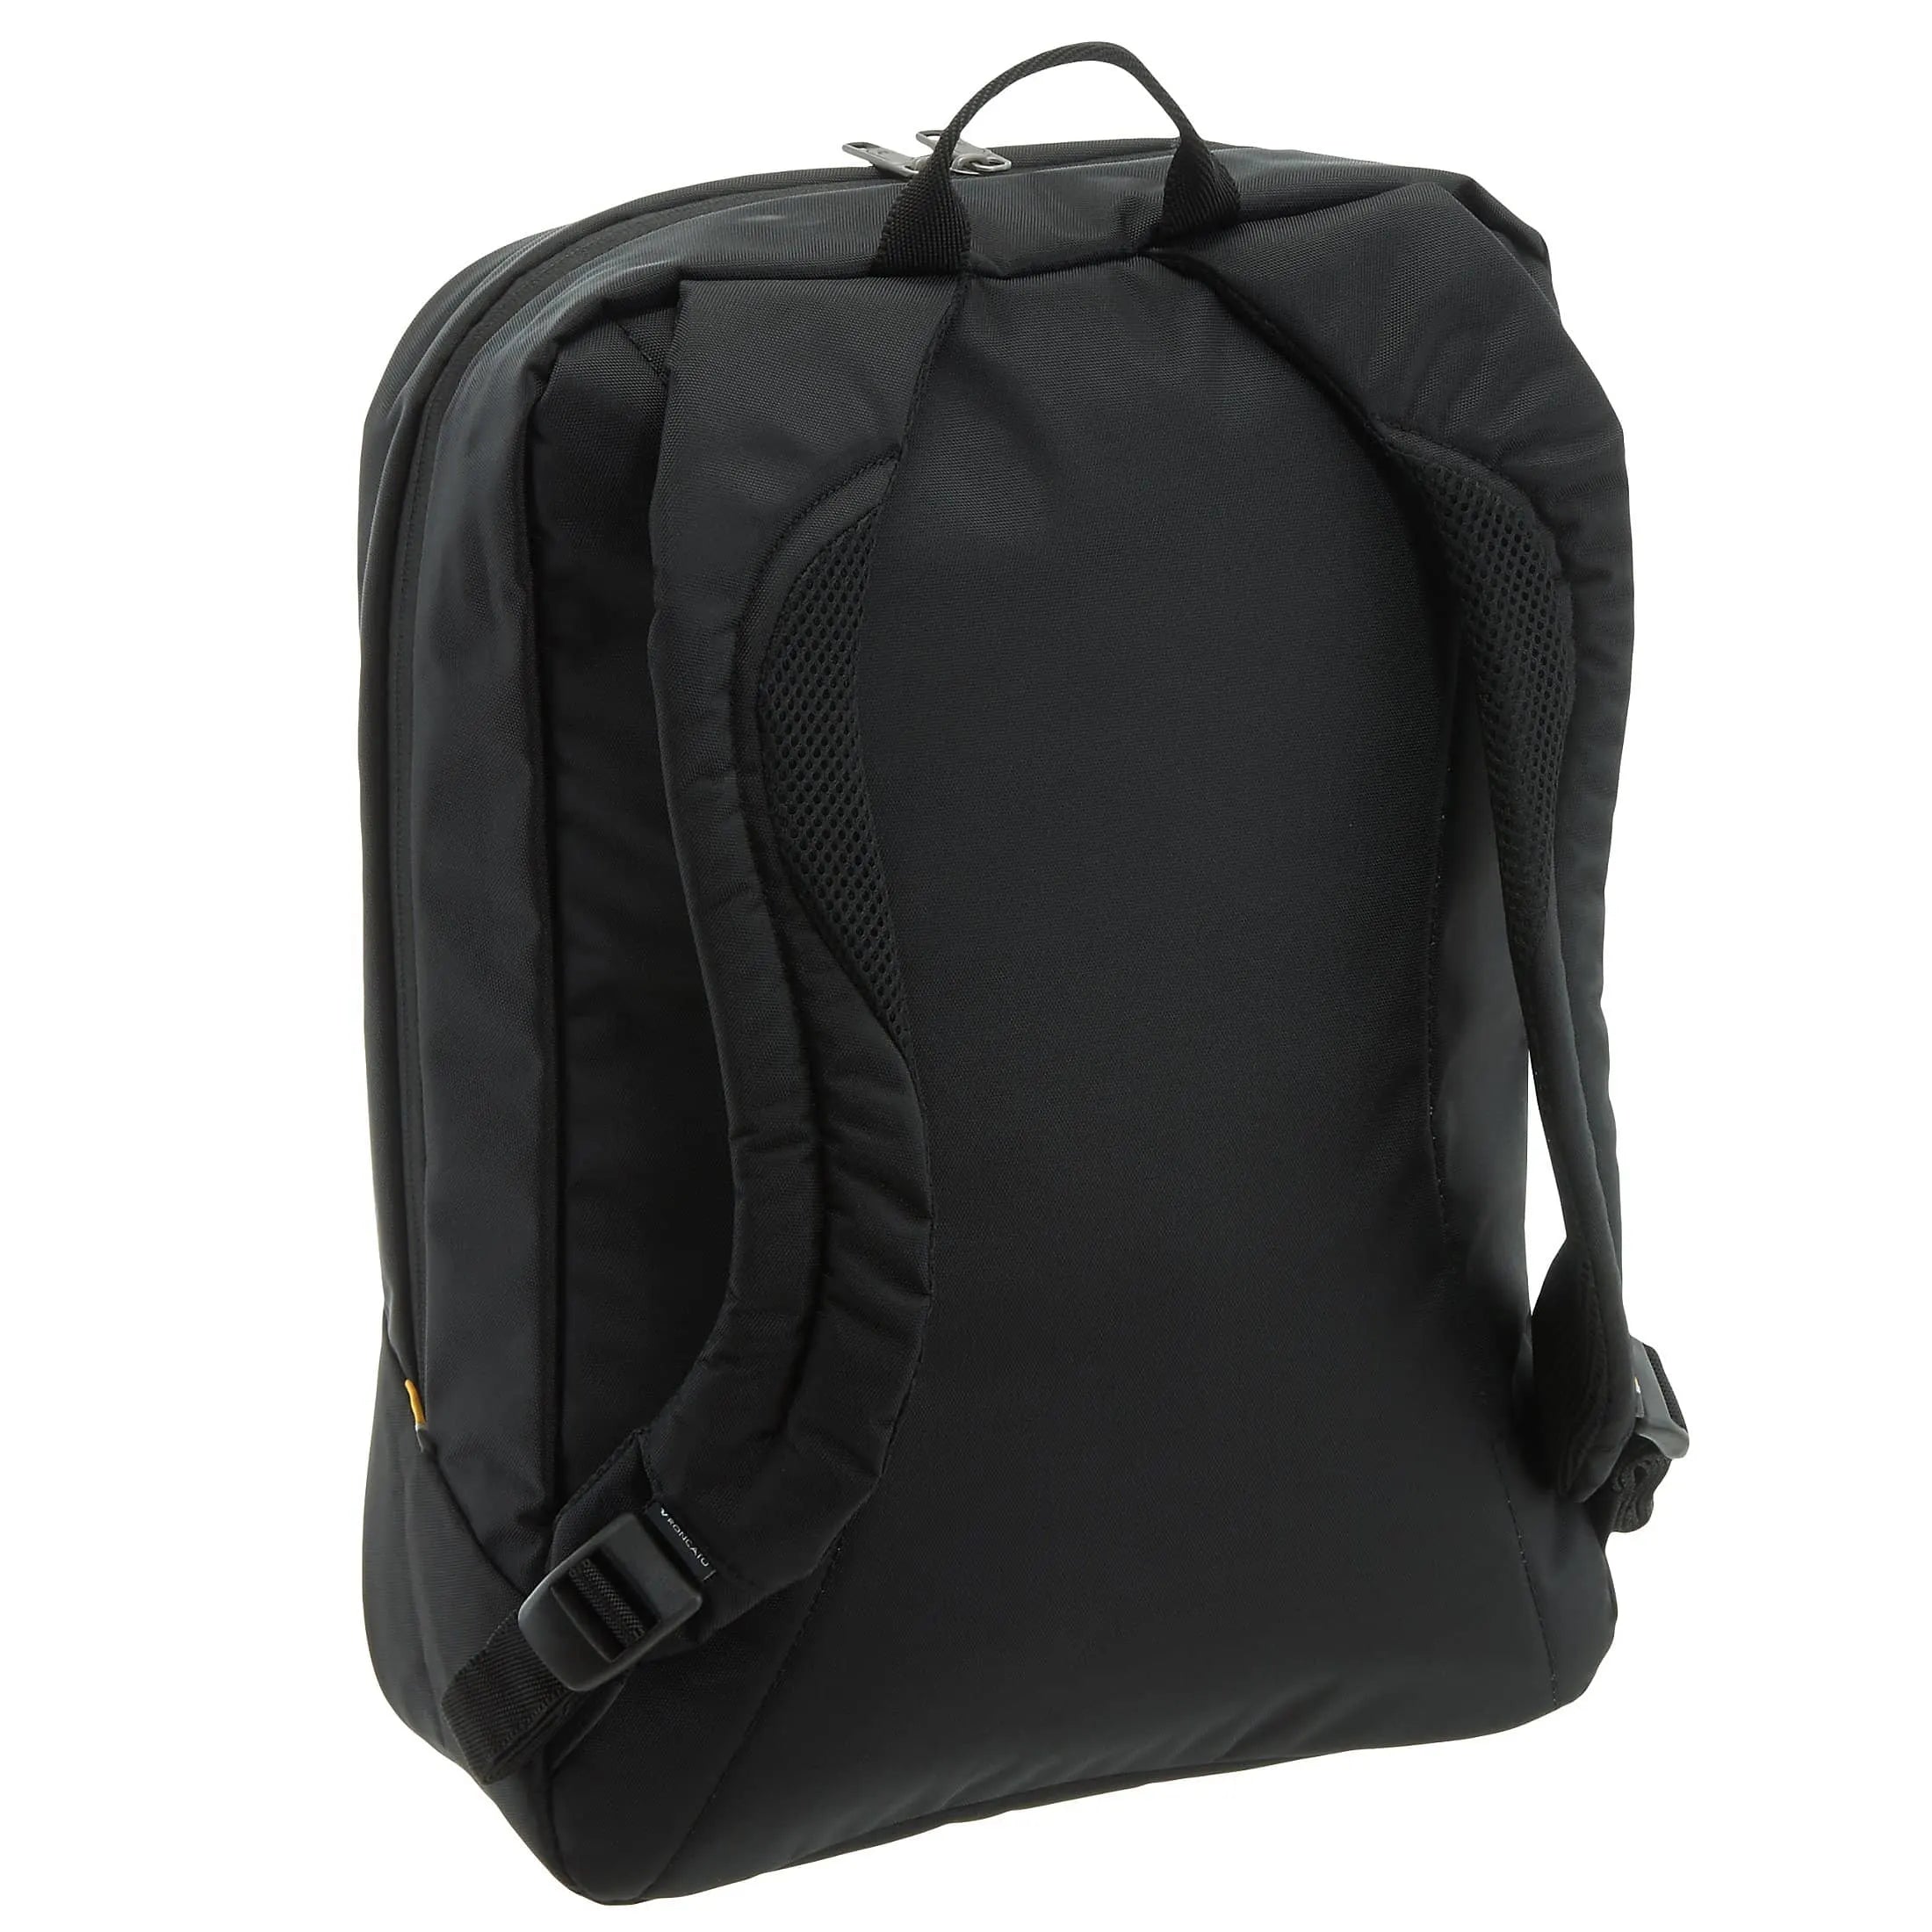 Roncato Hyper sac à dos 45 cm - noir